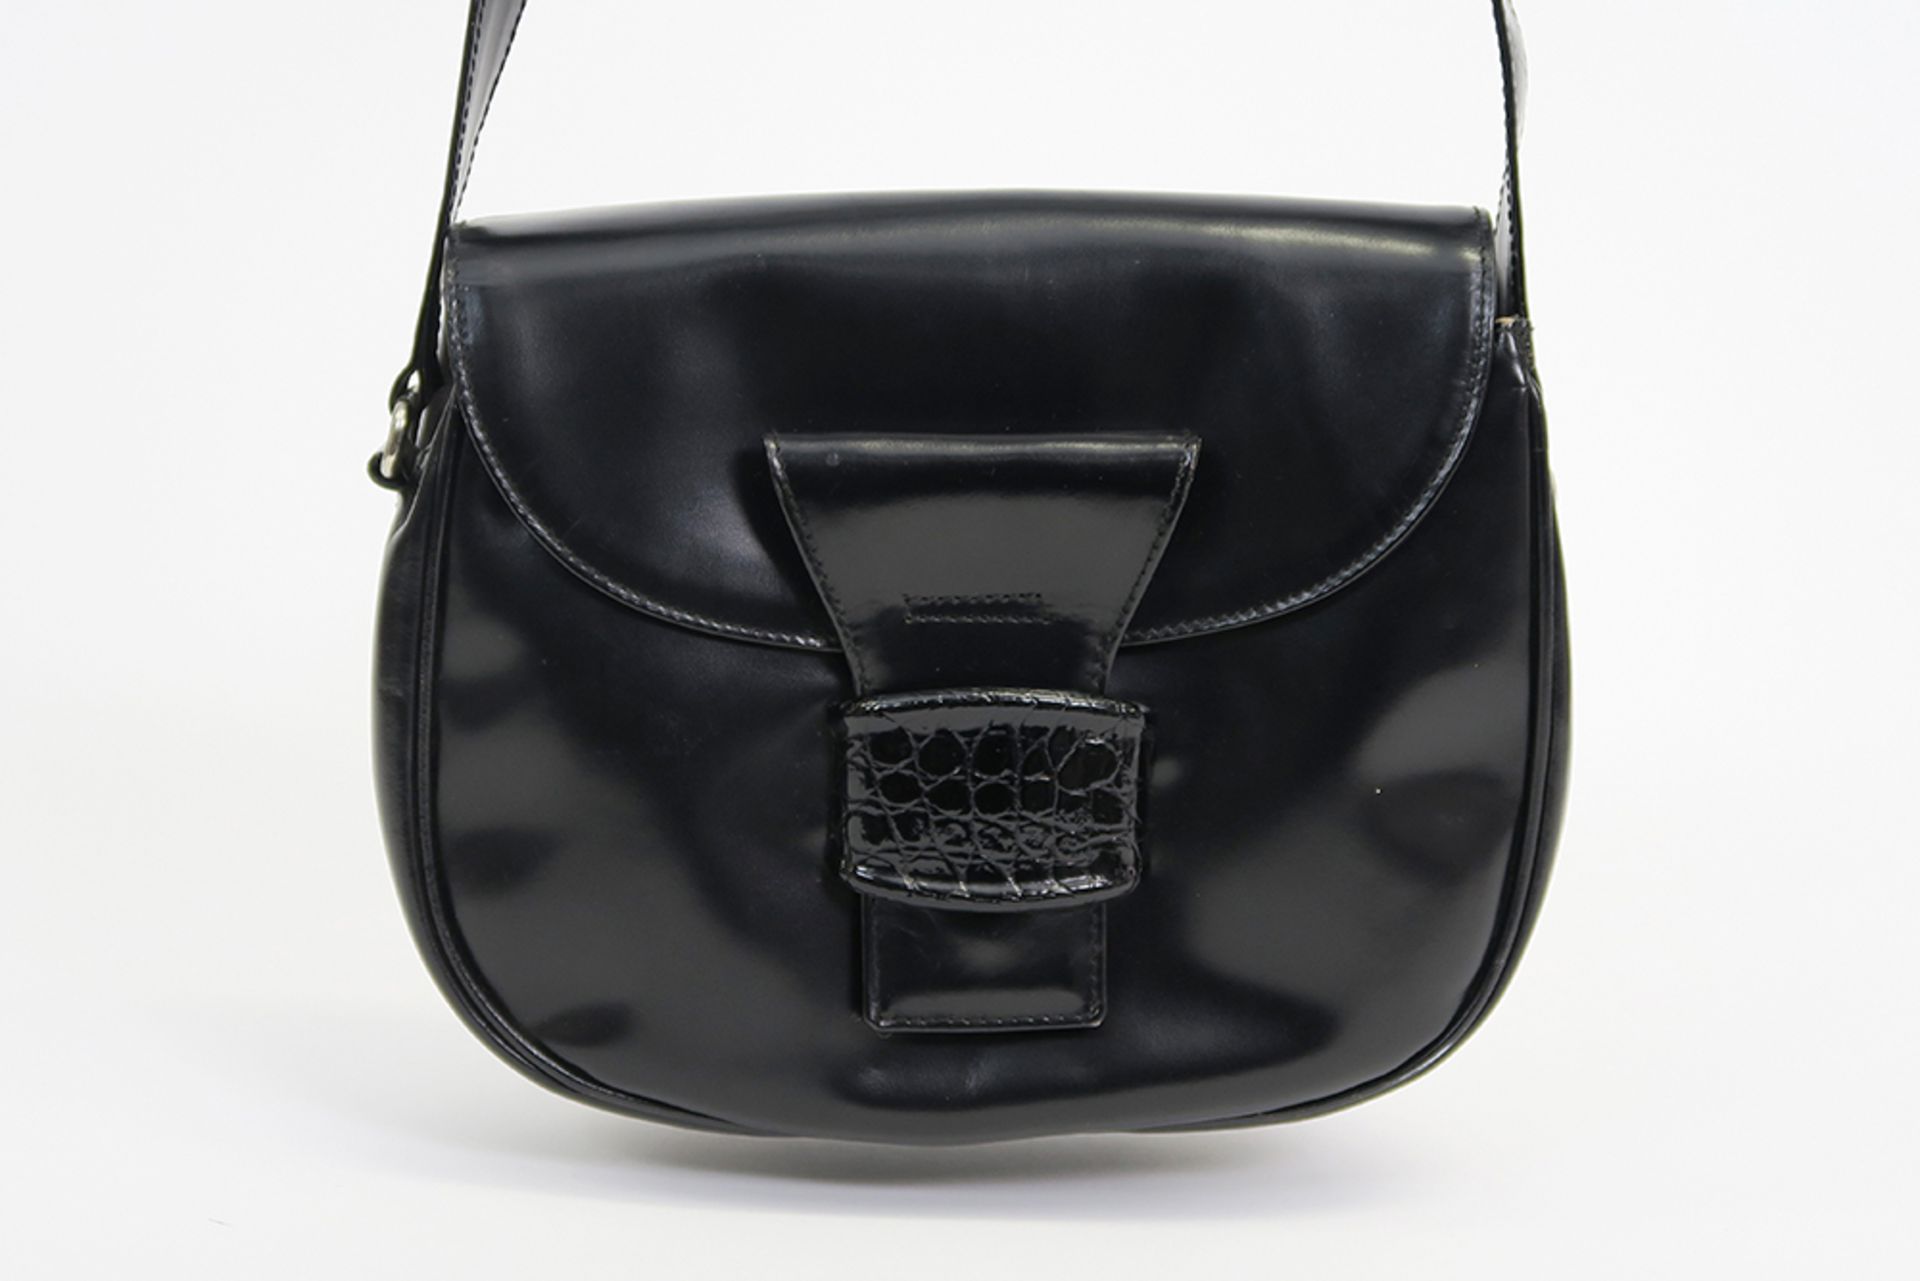 Prada marked handbag in black leather || PRADA handtas in zwart leder gemerkt - Image 2 of 4